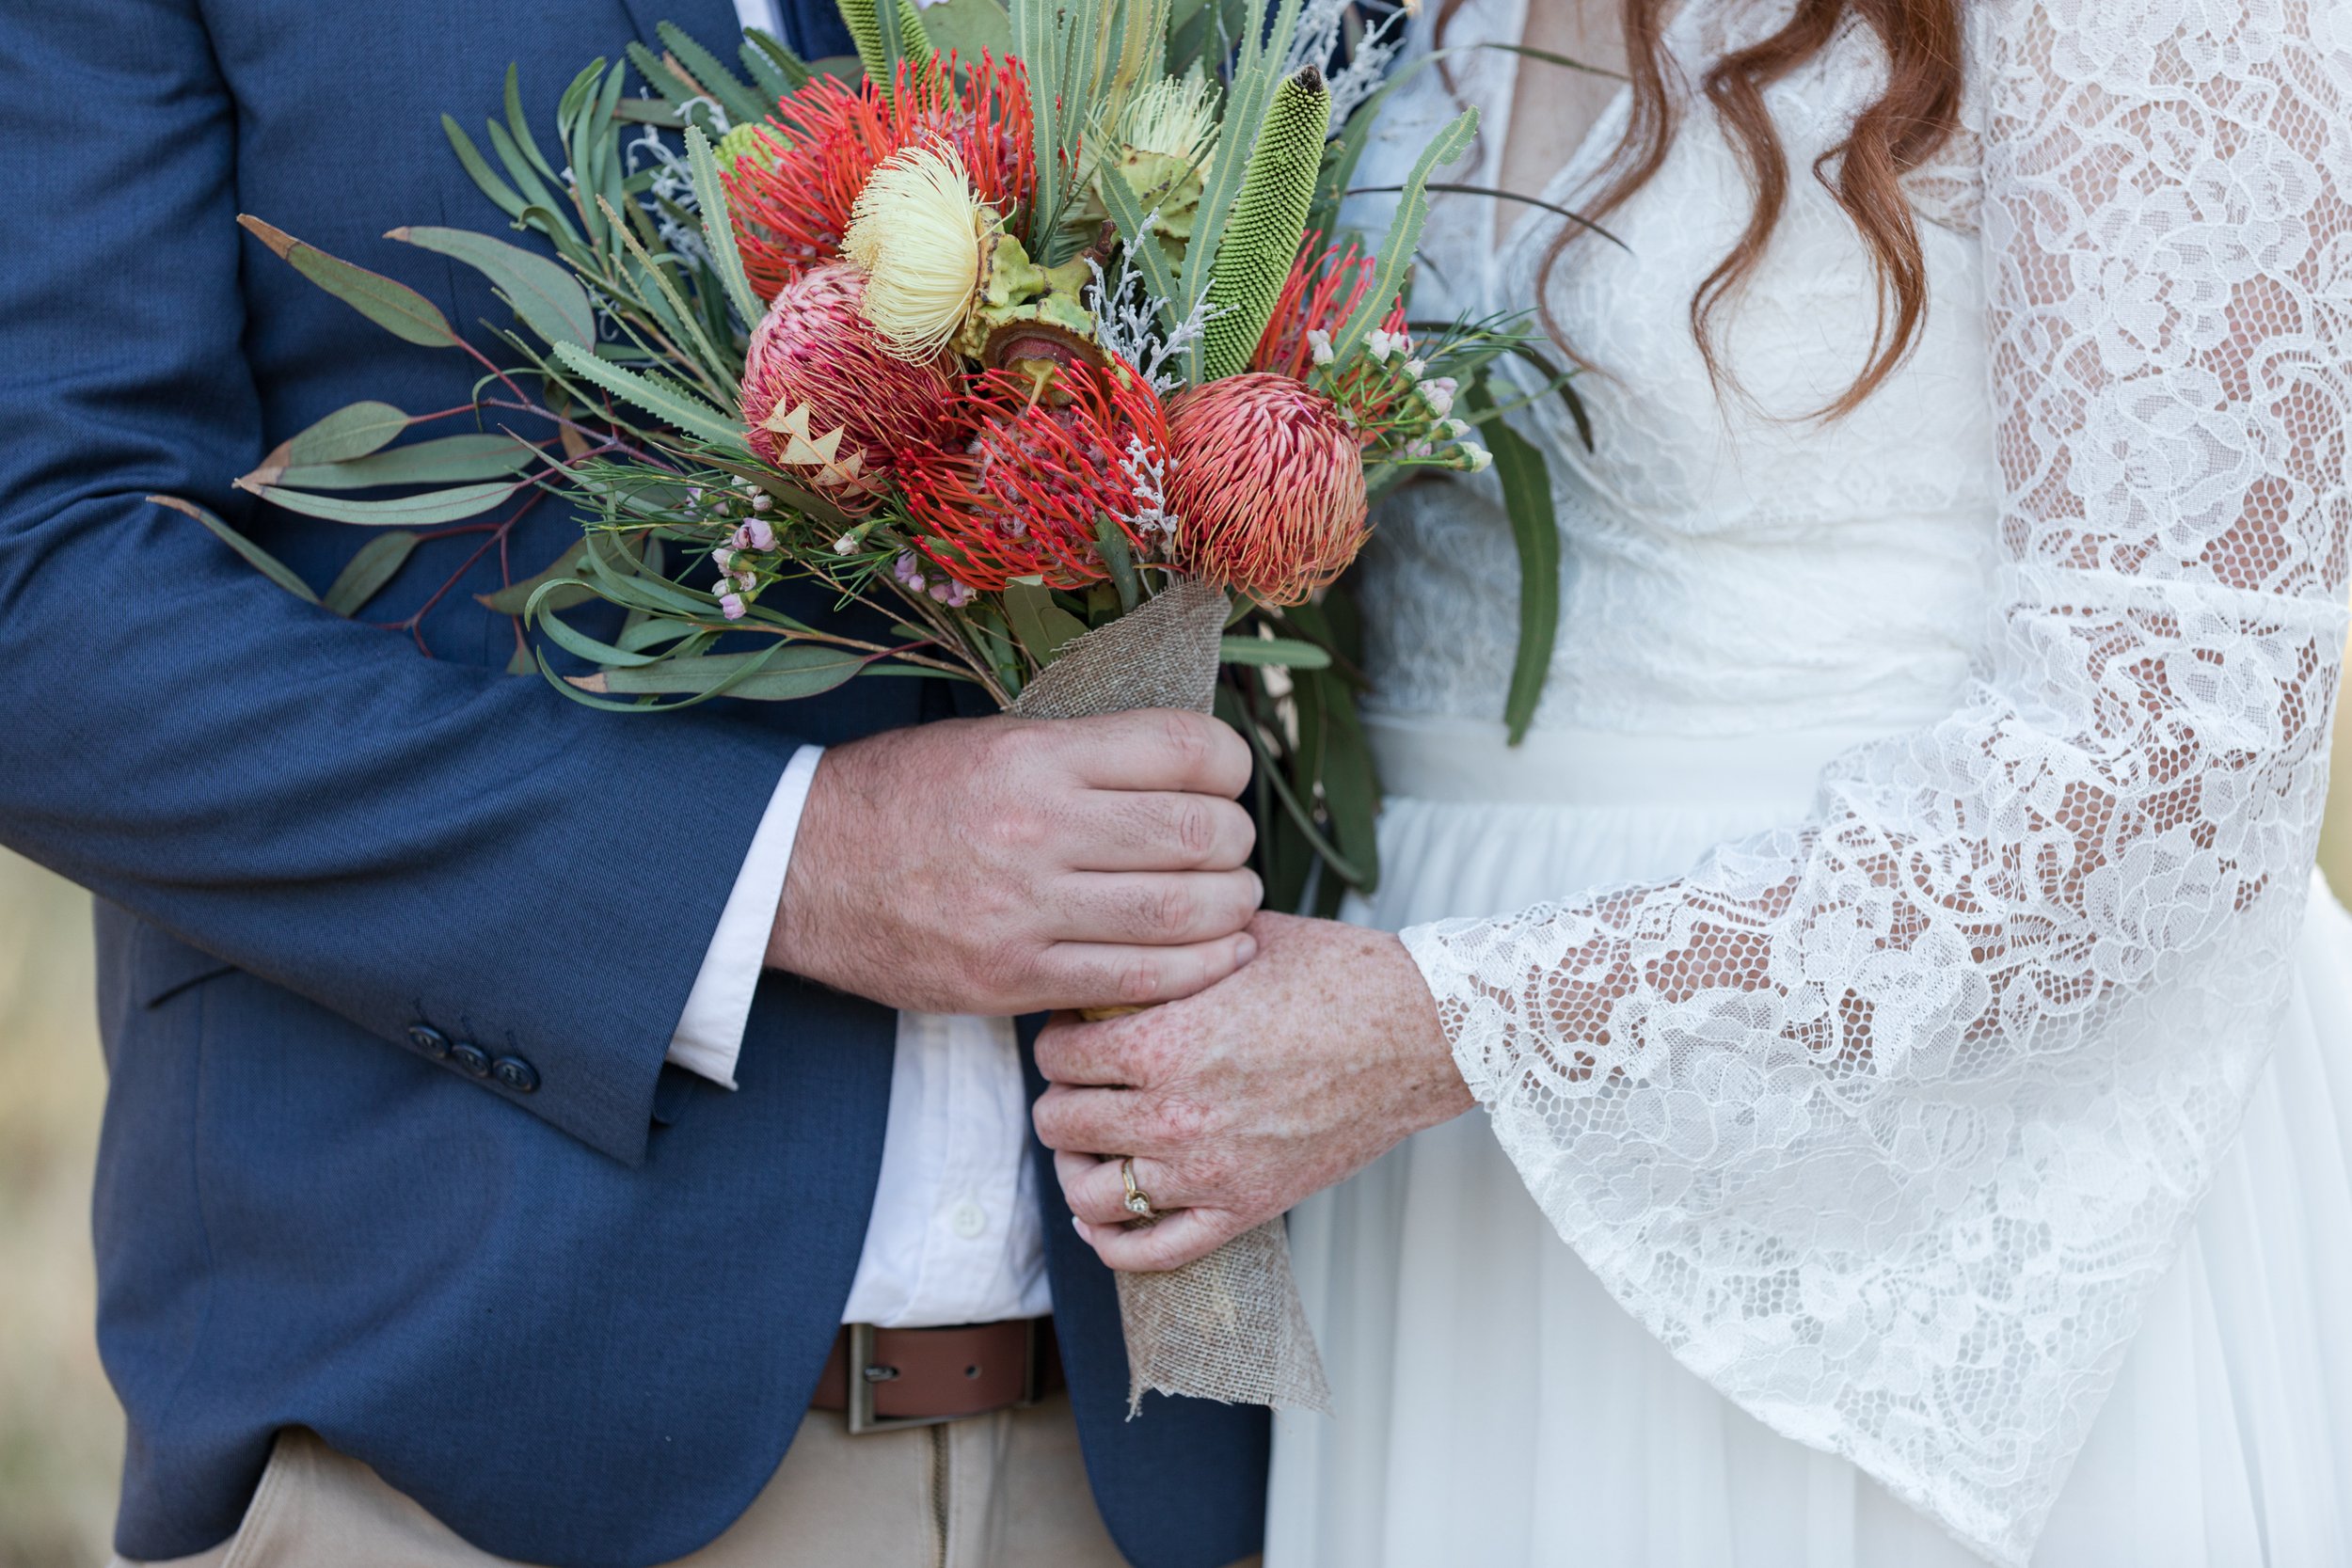 Wedding photographer Geraldton - country wedding - Michelle McKoy Photography (4).jpg